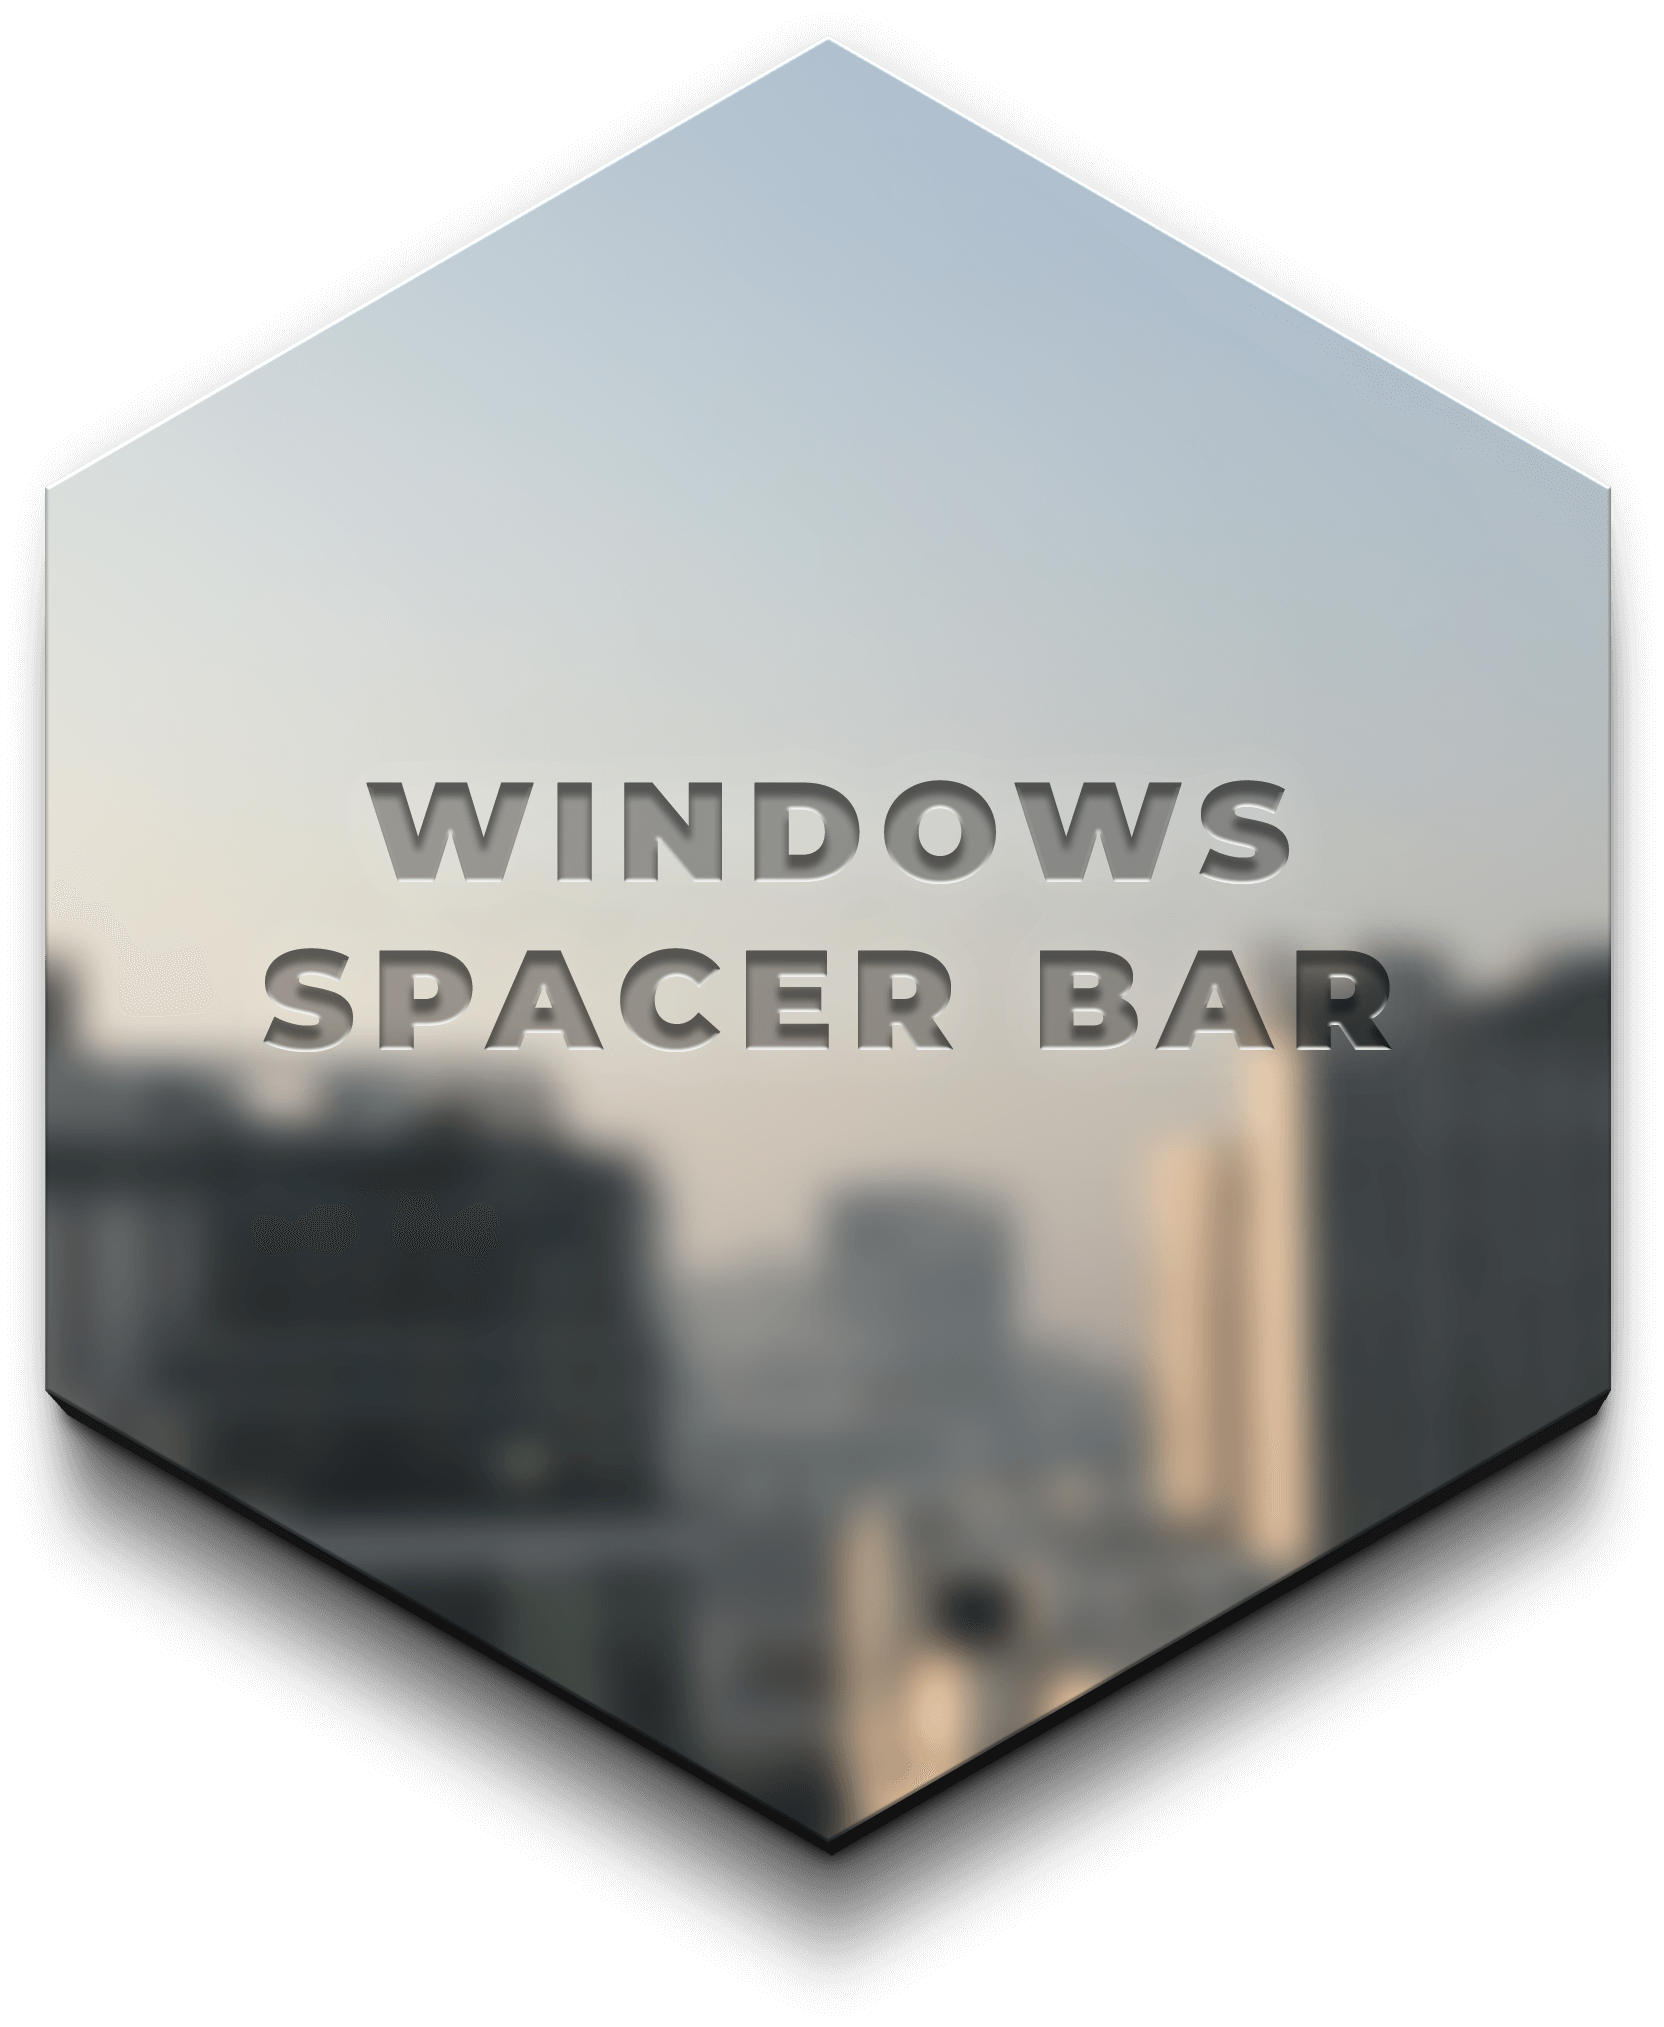 Windows spacer bar